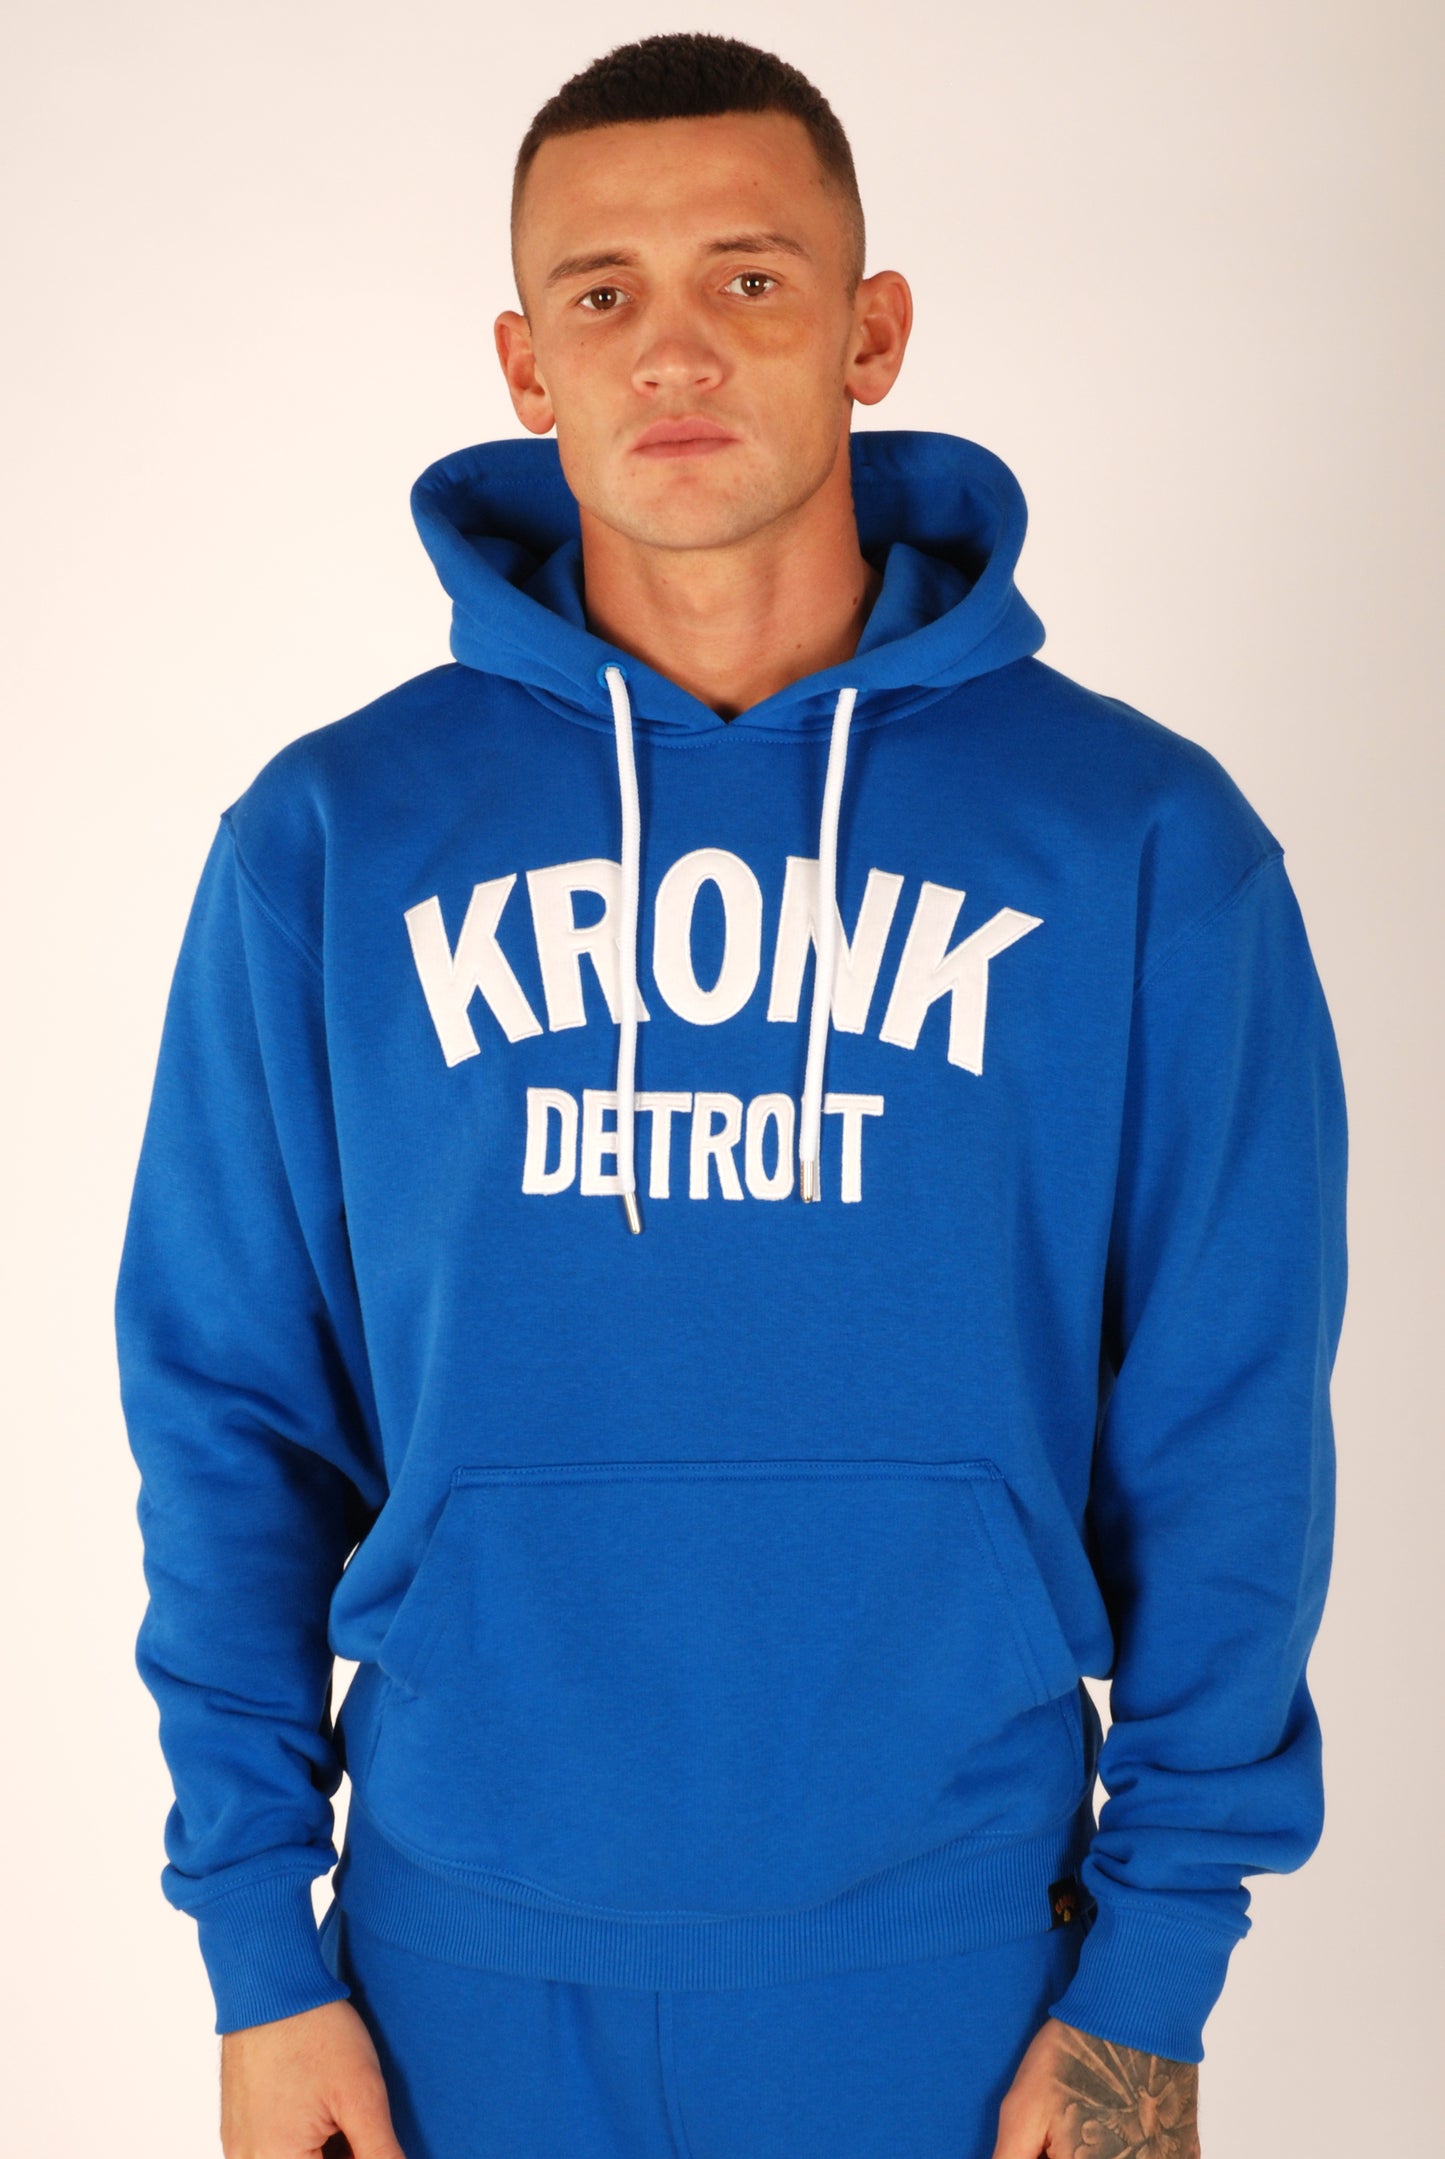 KRONK Detroit Applique Hoodie Regular Fit Royal Blue with White logo